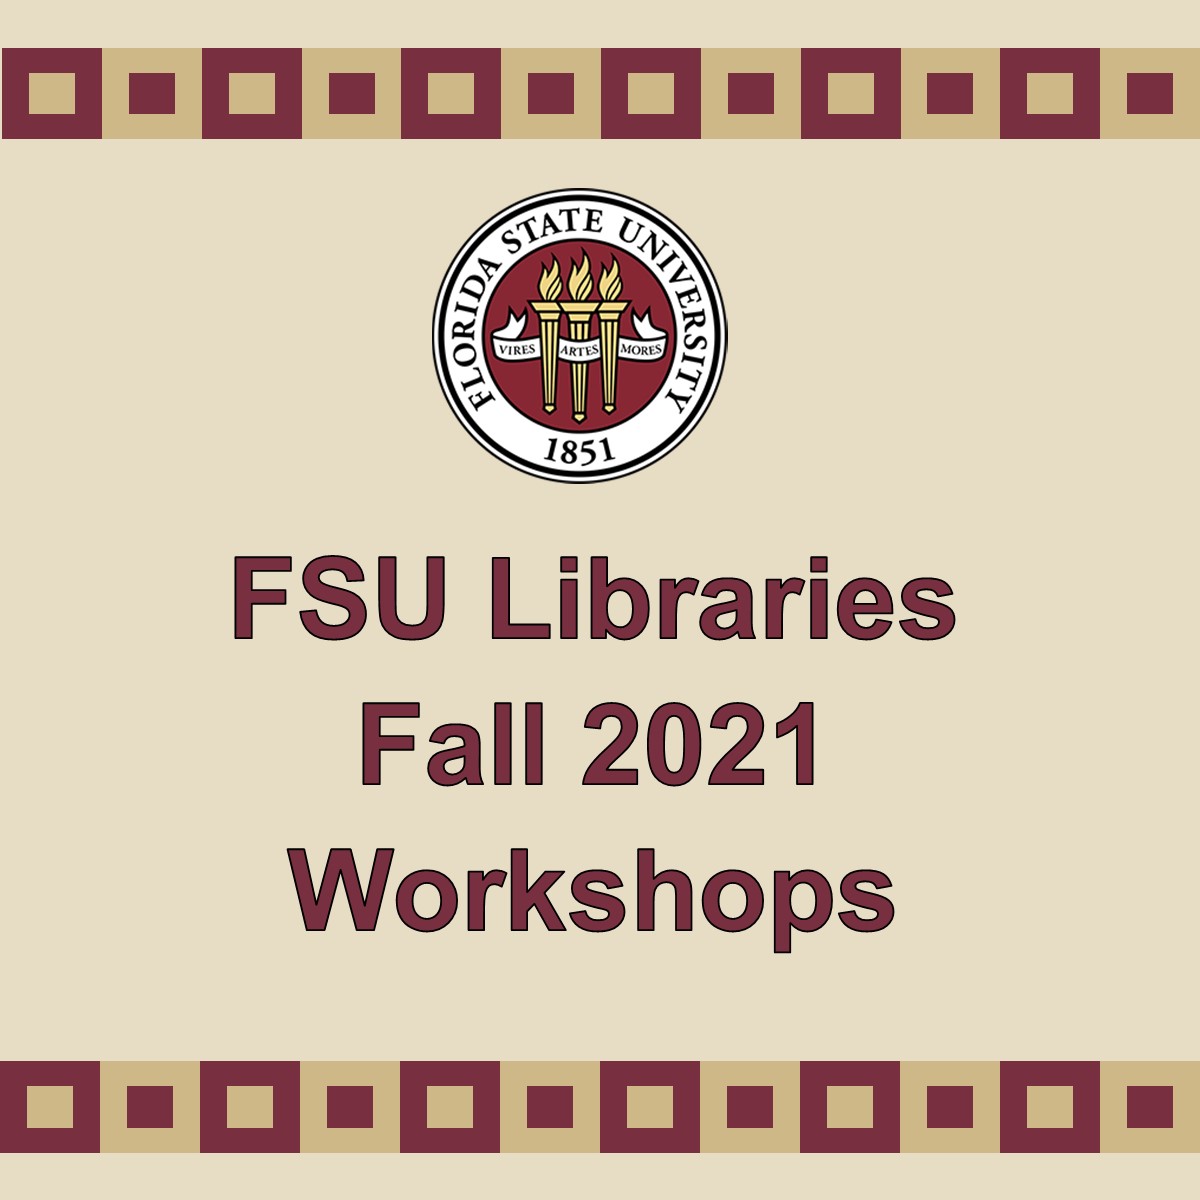 Image-FSU Libraries Fall 2021 Workshops with FSU Seal. Also link to the FSU Libraries "All Workshops" webpage. 